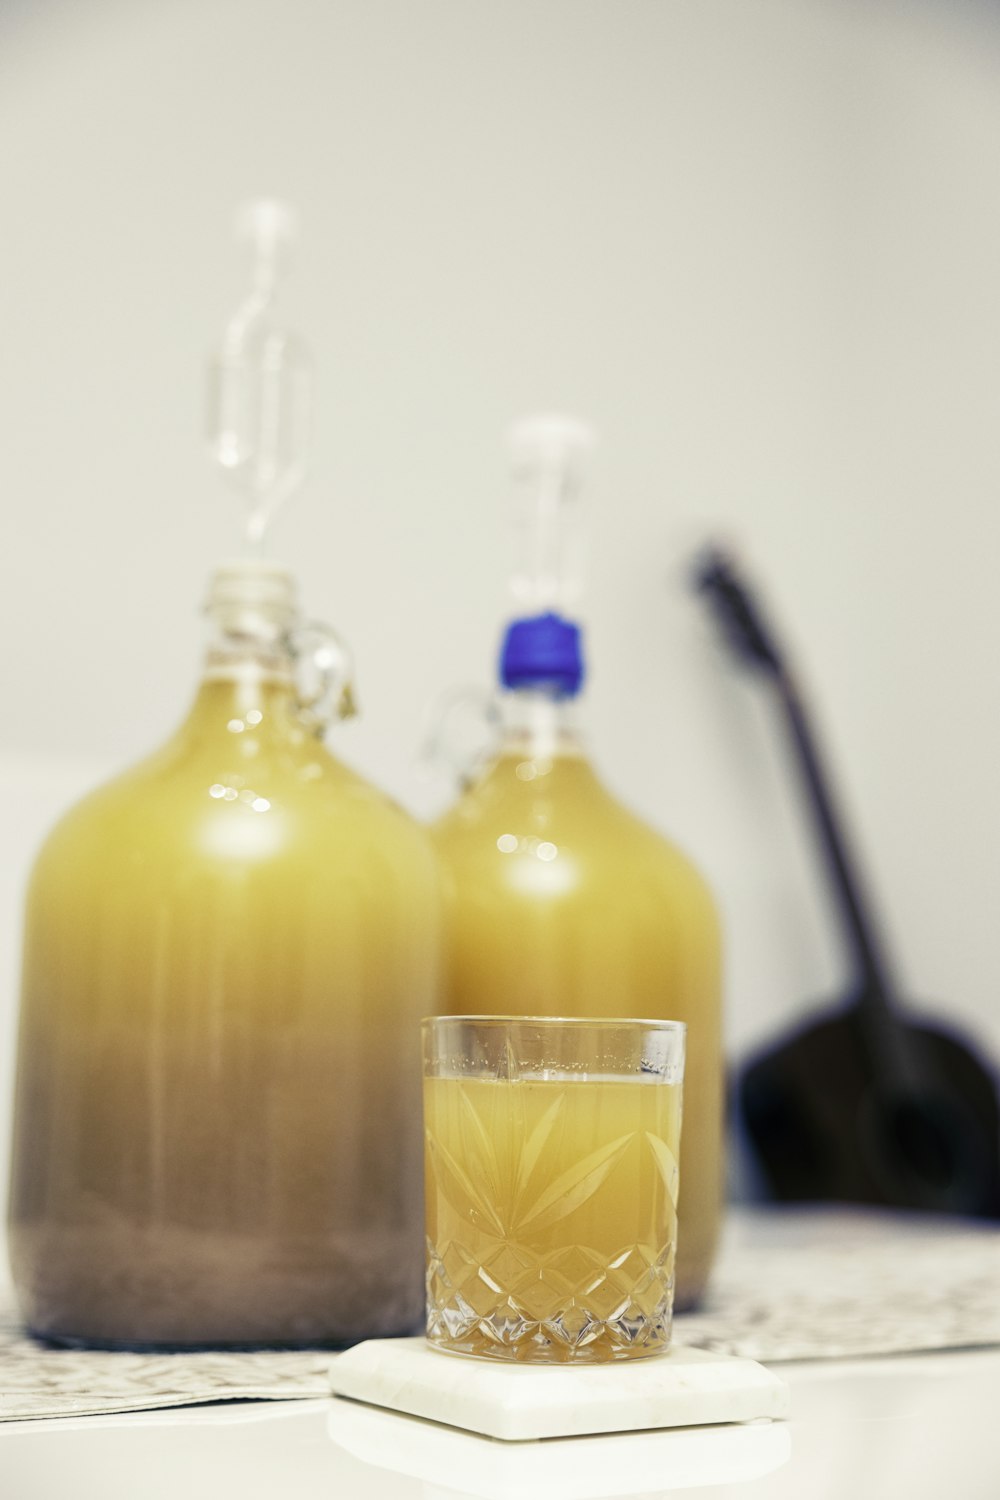 clear glass bottle with orange liquid